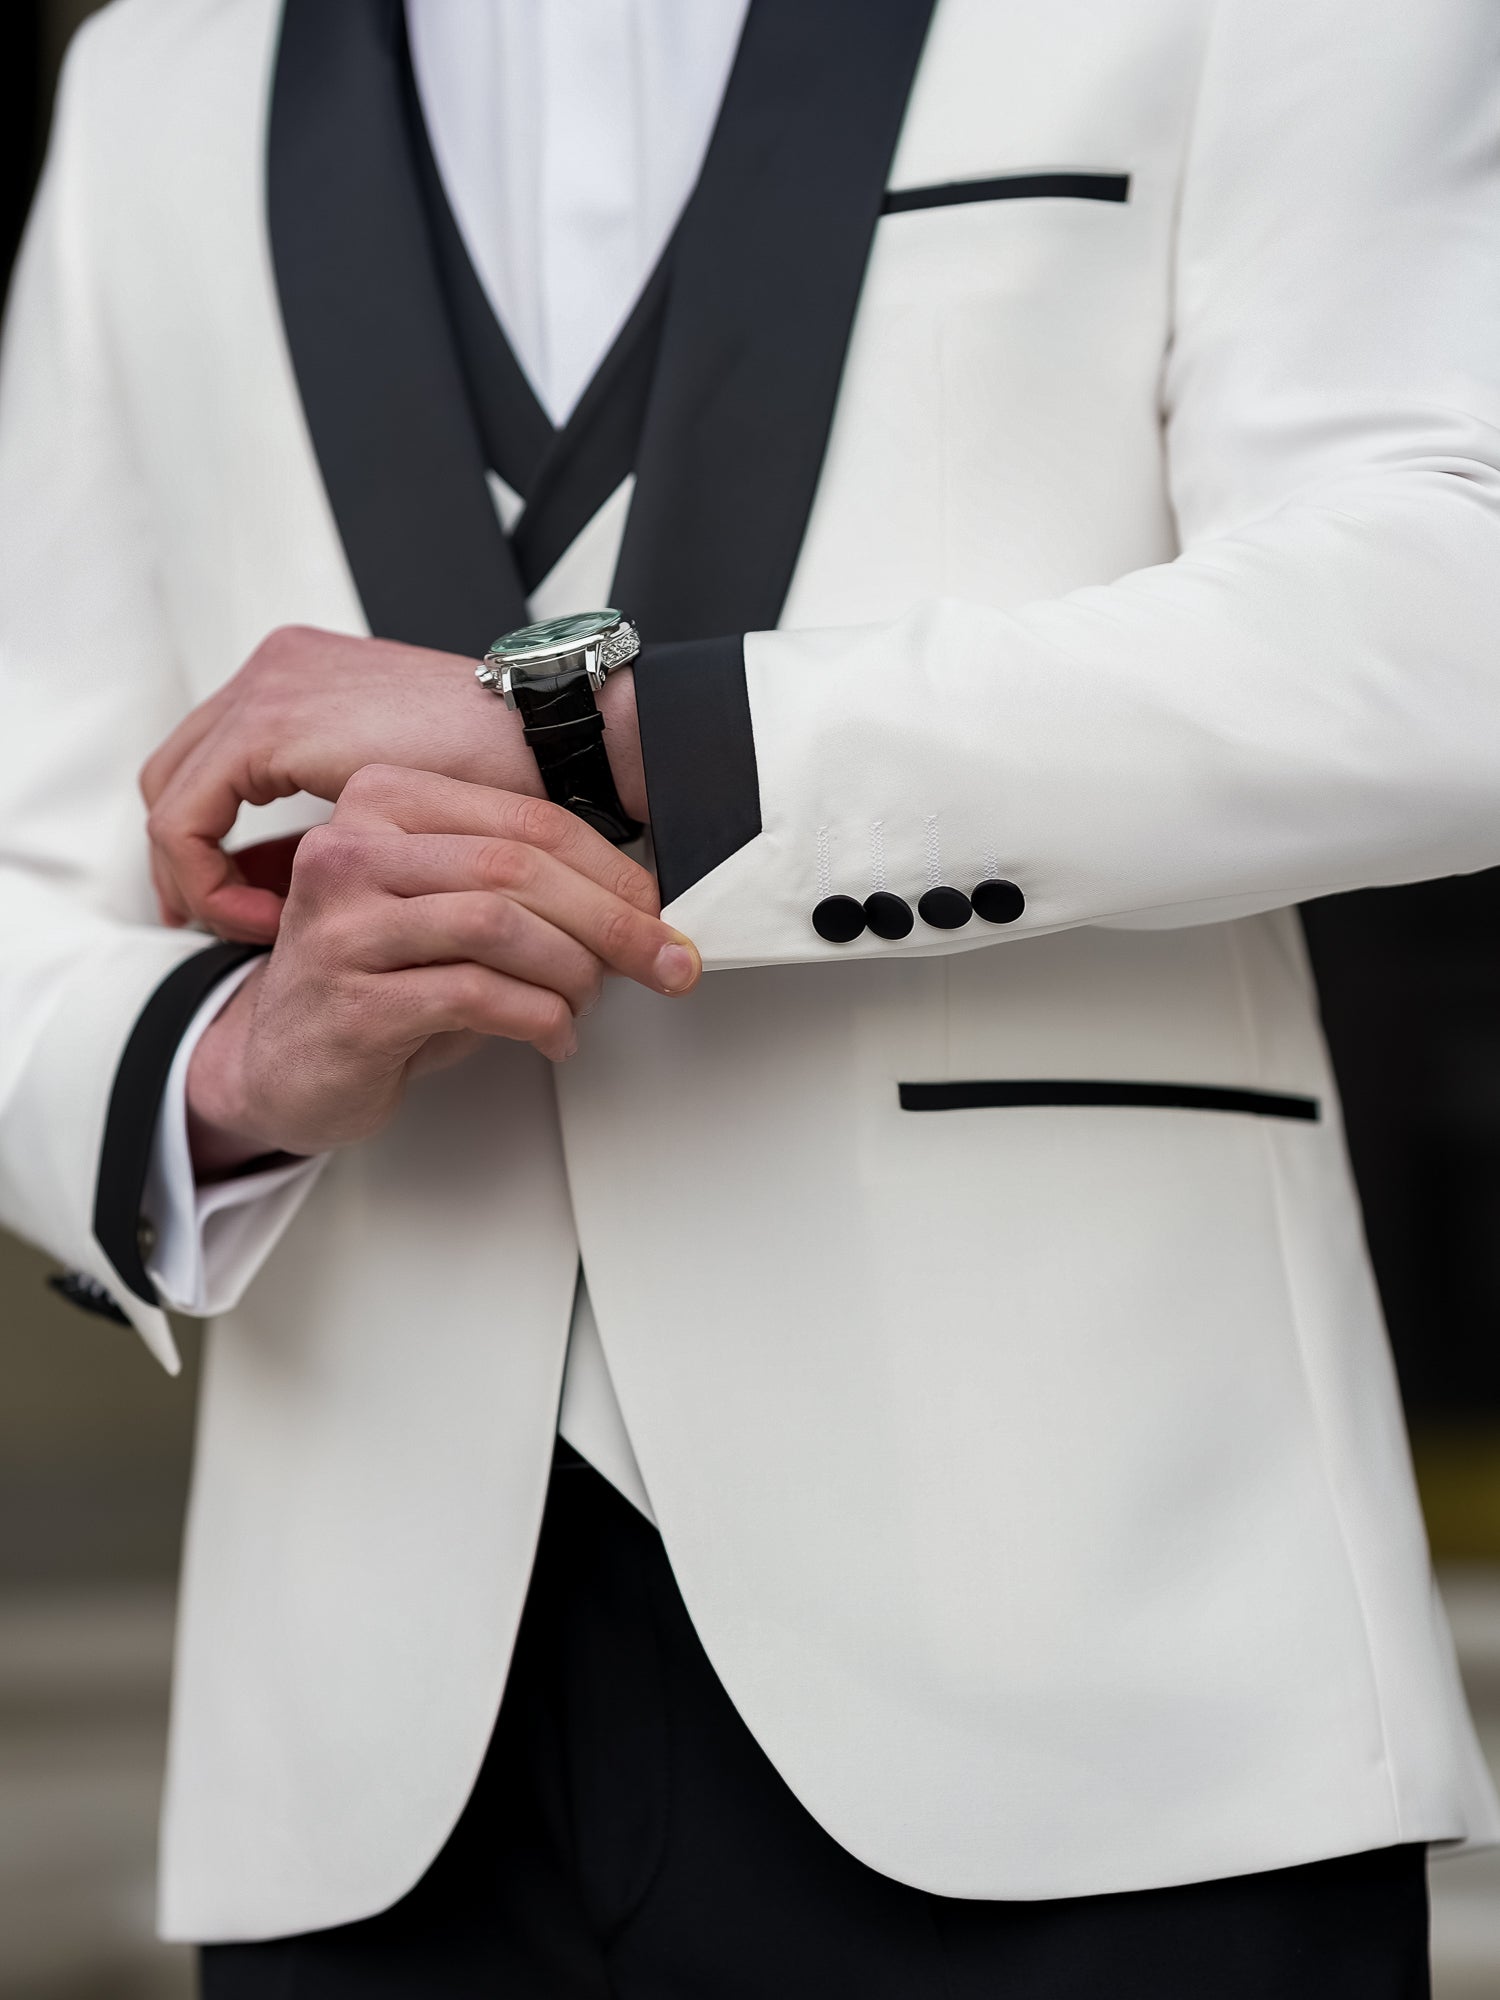 White Slim-Fit Tuxedo 3-Piece